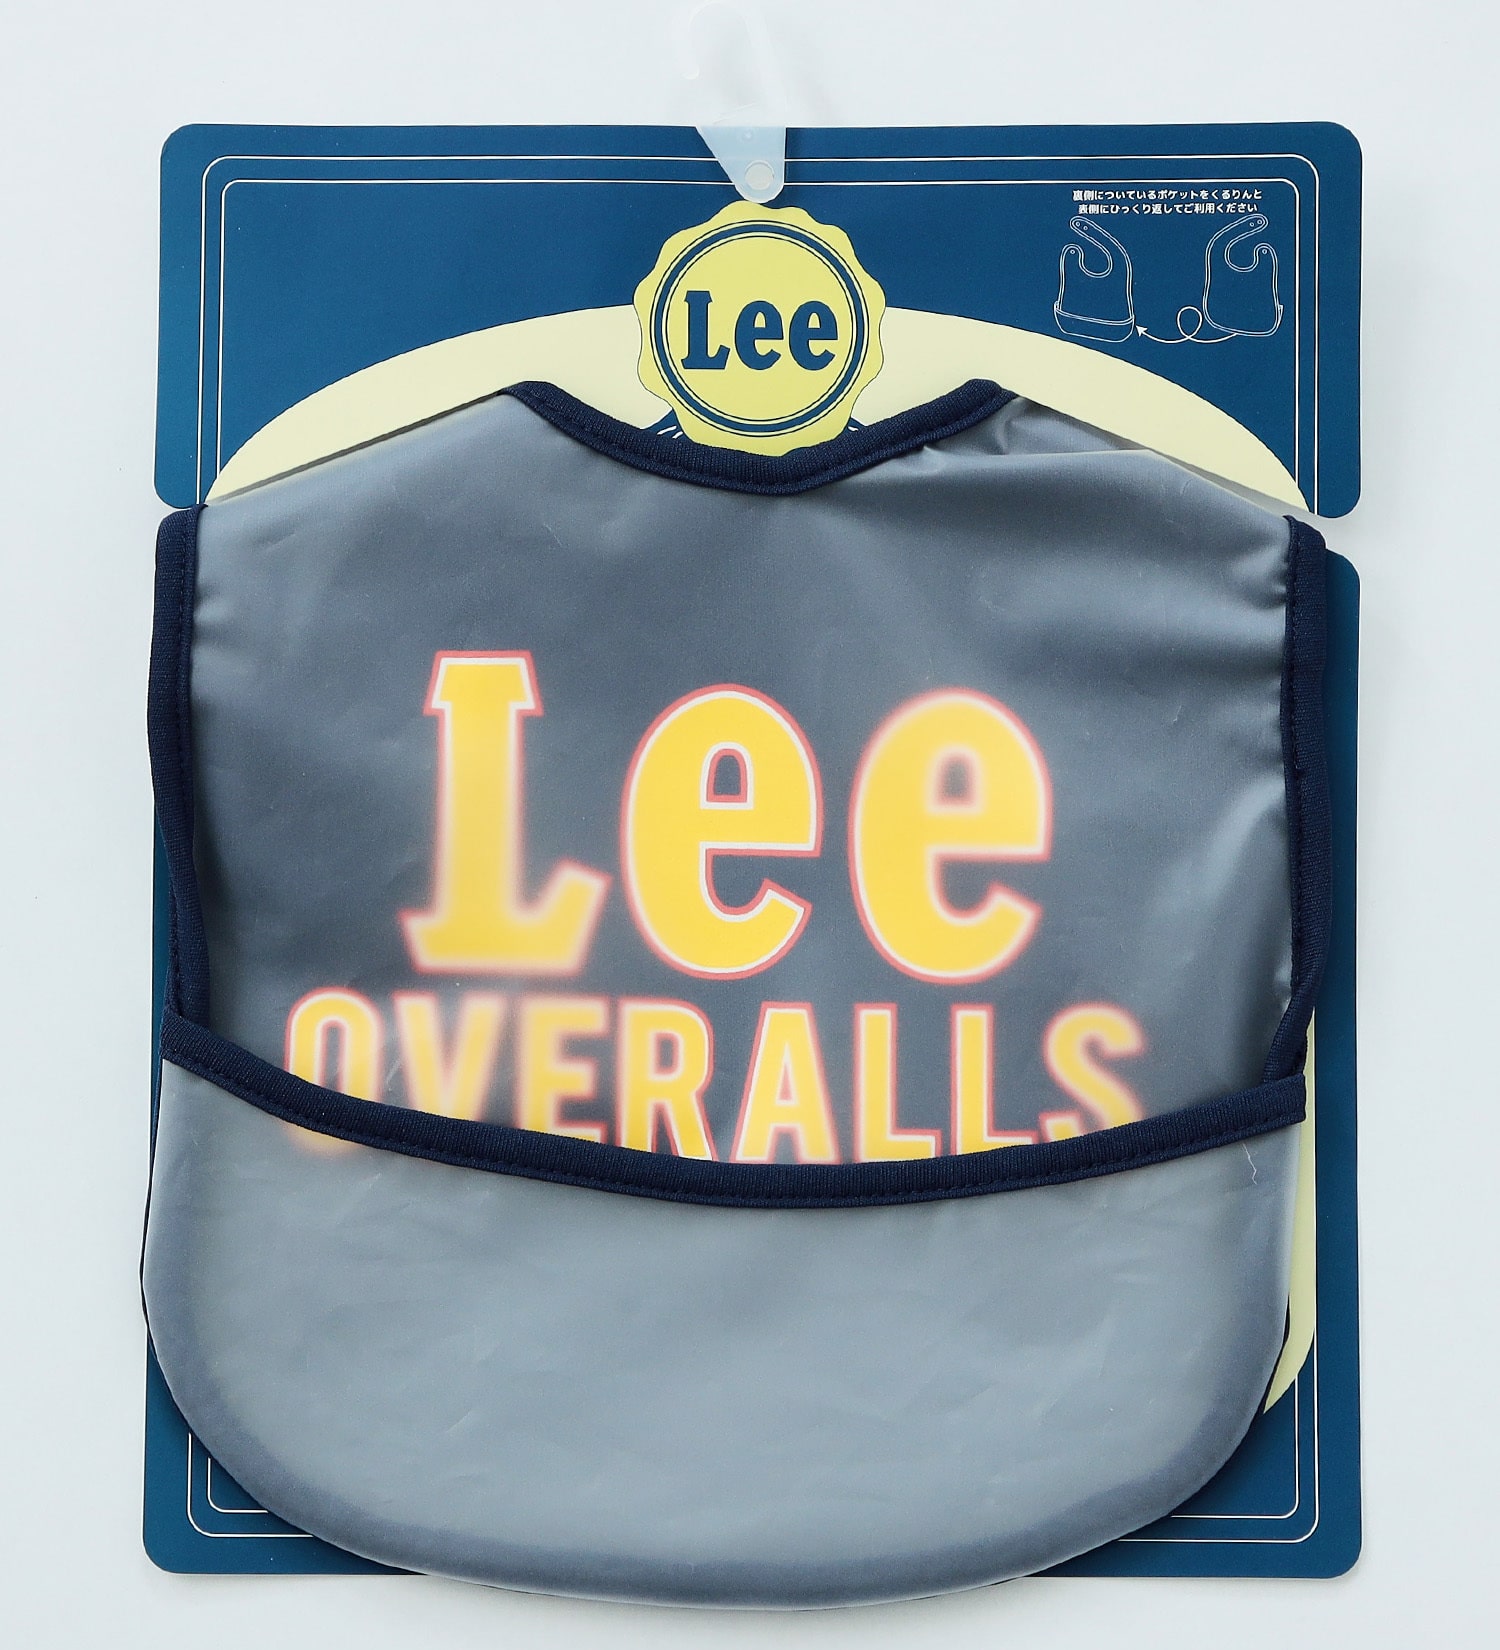 Lee(リー)のベビー　お食事用スタイ/エプロン|ファッション雑貨/エプロン/キッズ|ネイビー